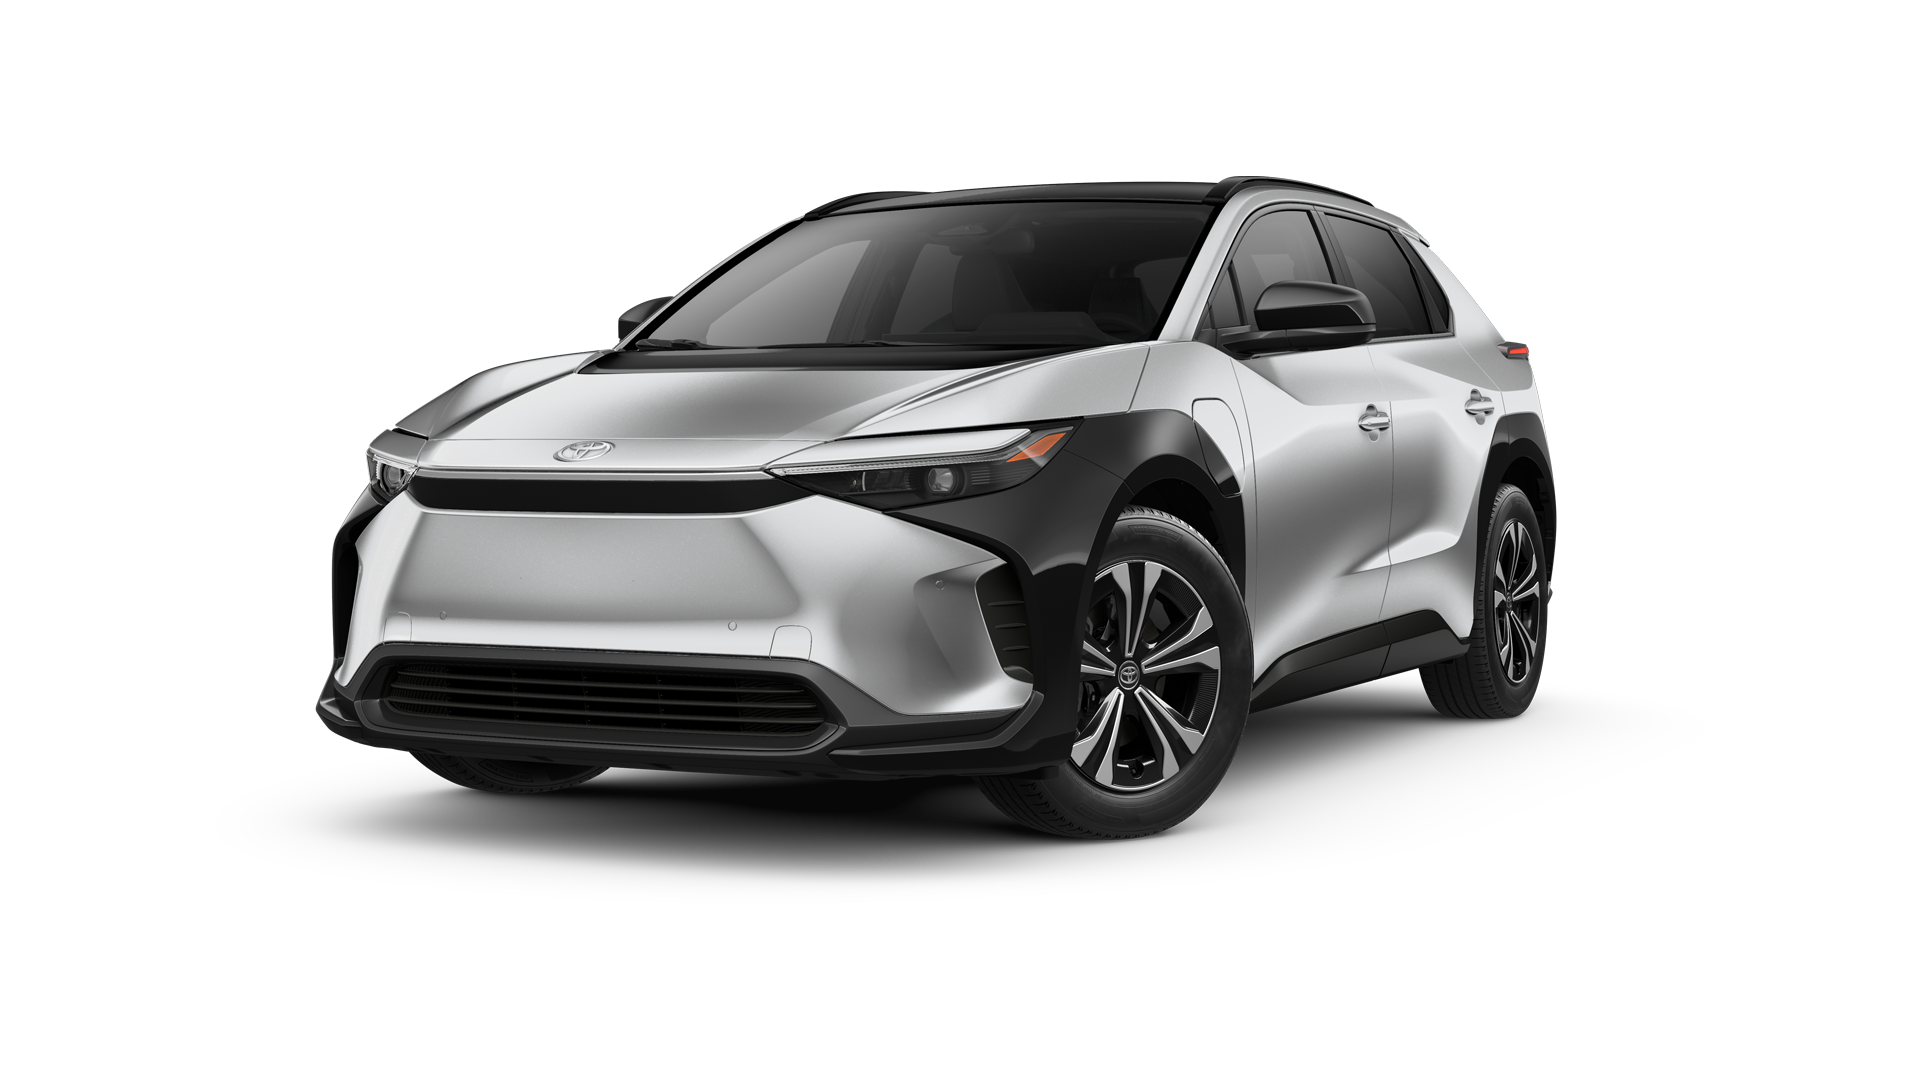 2023 Toyota bZ4X in Elemental Silver Metallic*.